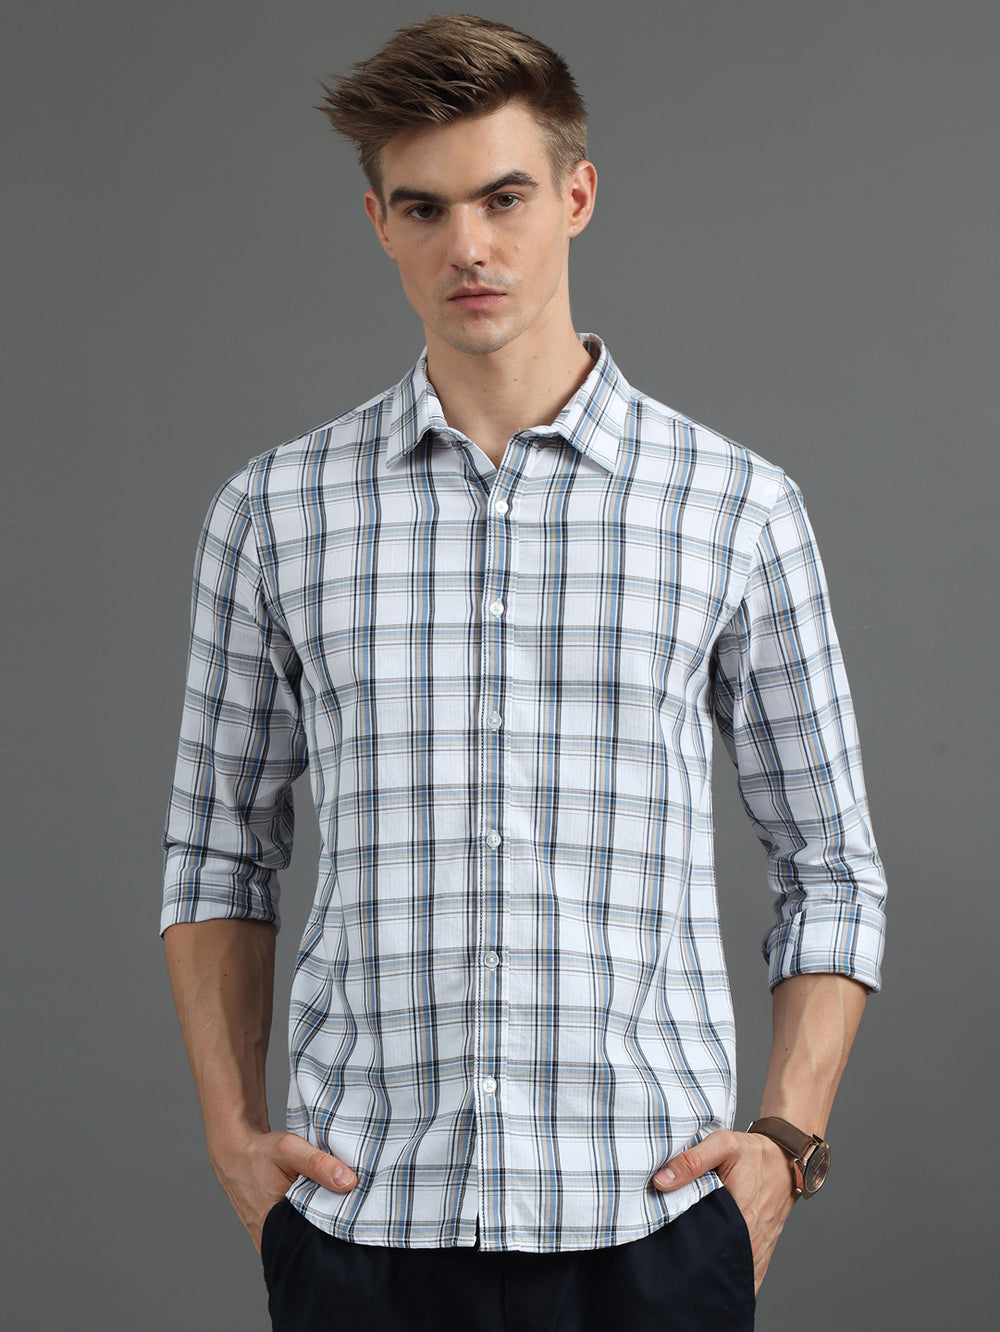 Parallel Grid White Checked Shirt Checks Shirt Bushirt   